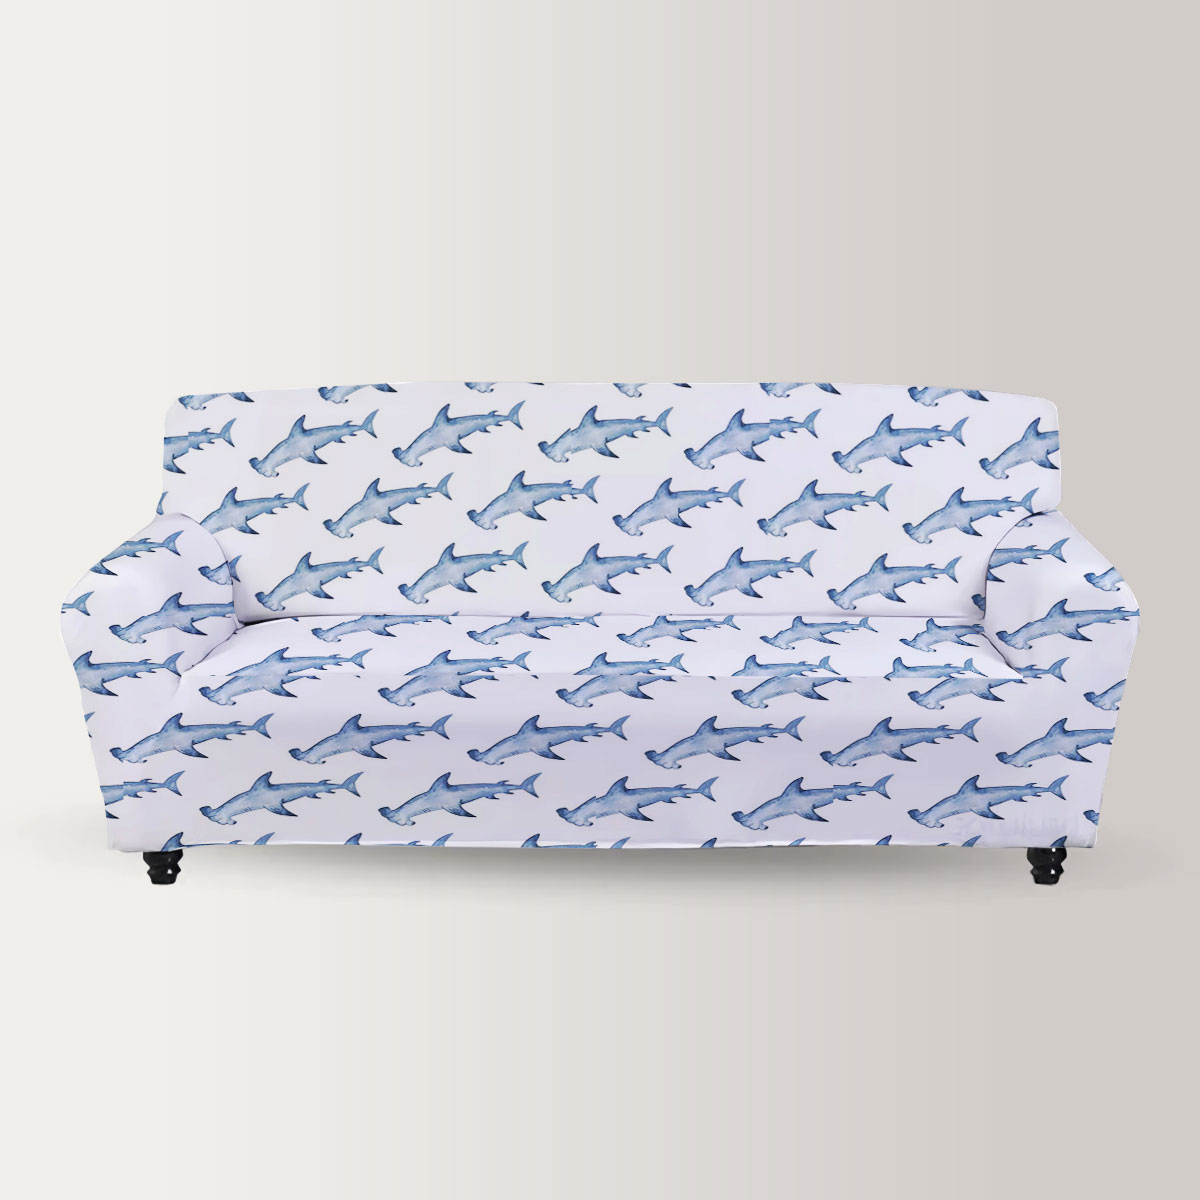 Hammerhead Shark Sofa Cover